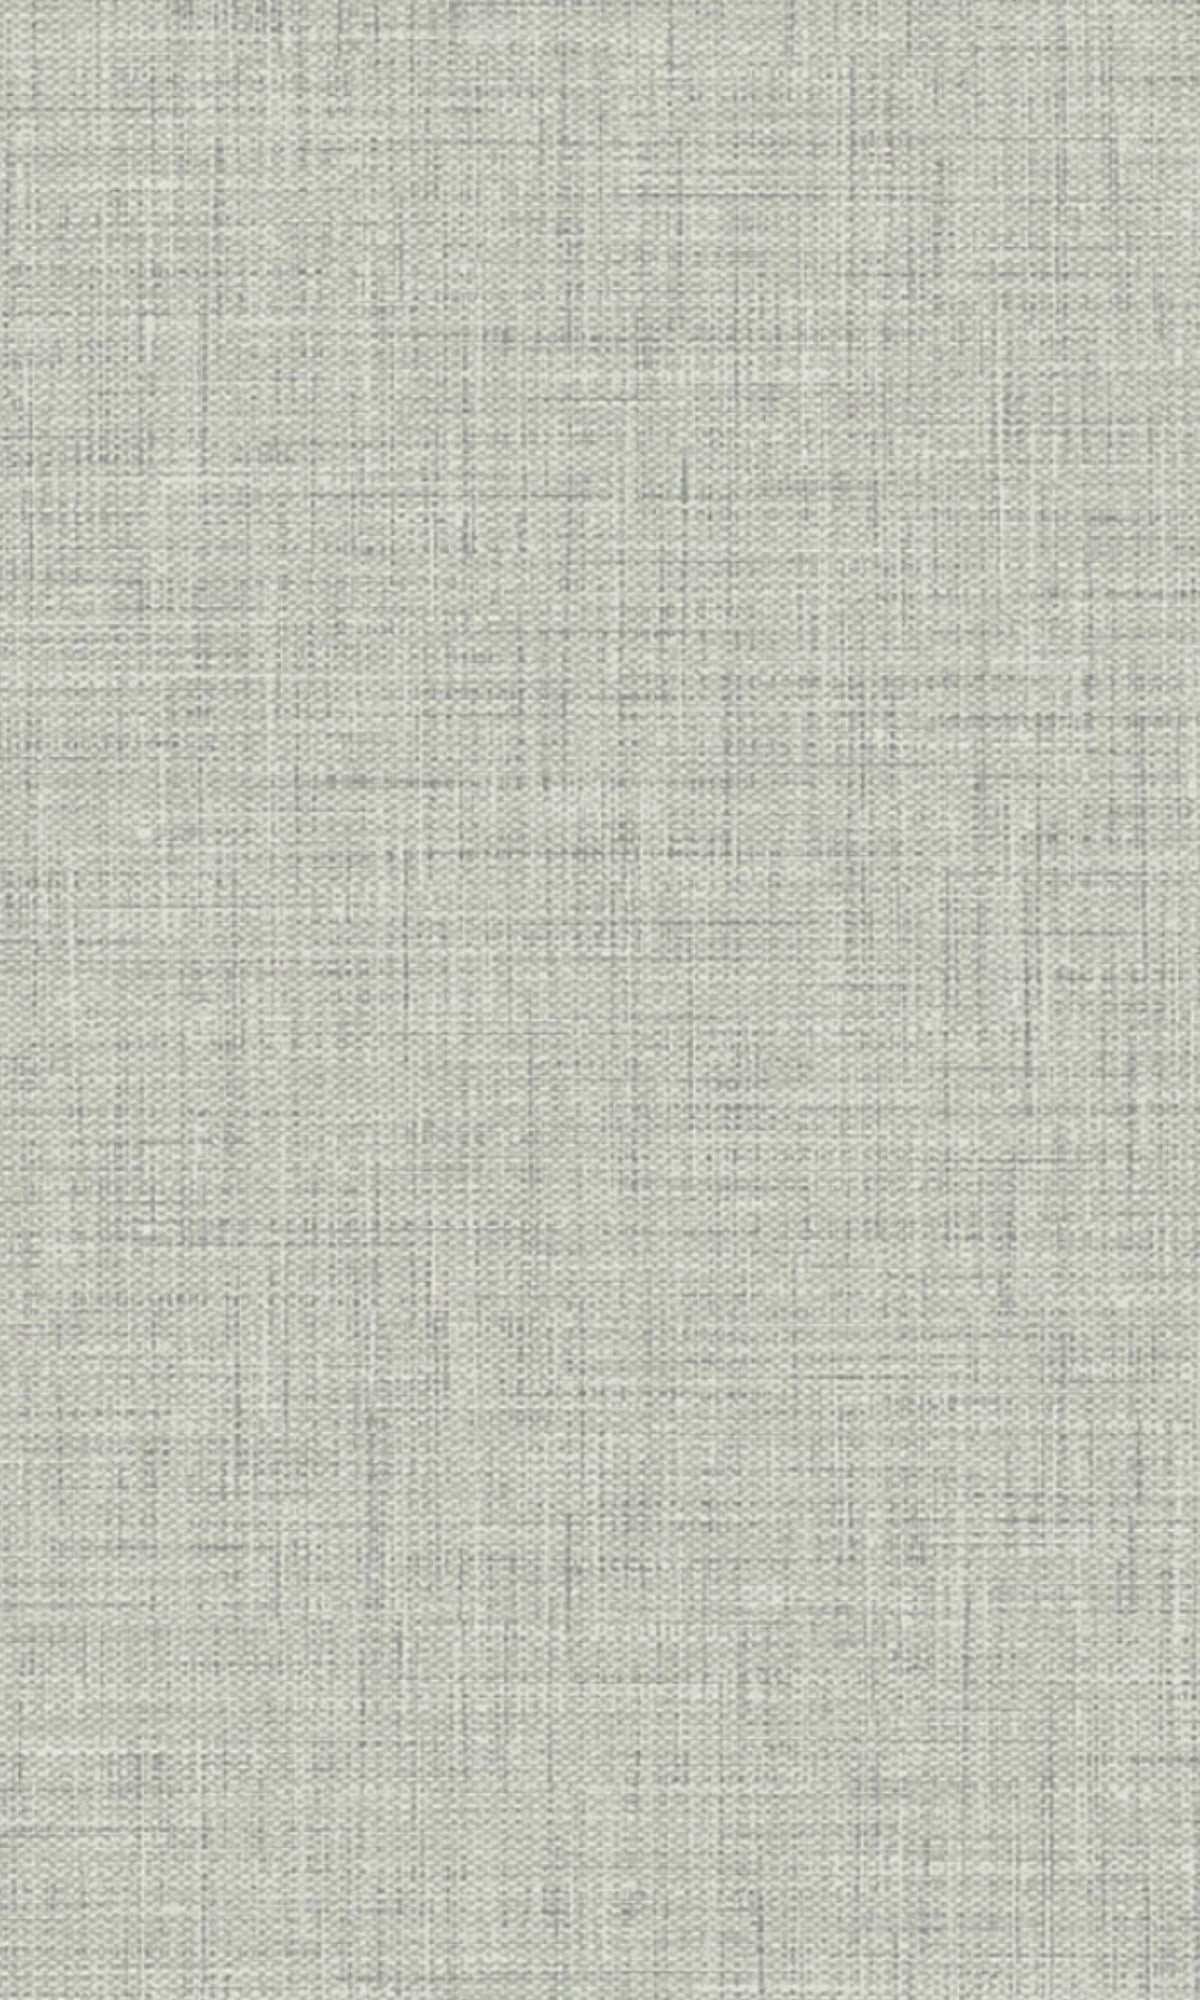 Dove Grey Fabric Like Textured Vinyl Commercial Wallpaper C7600